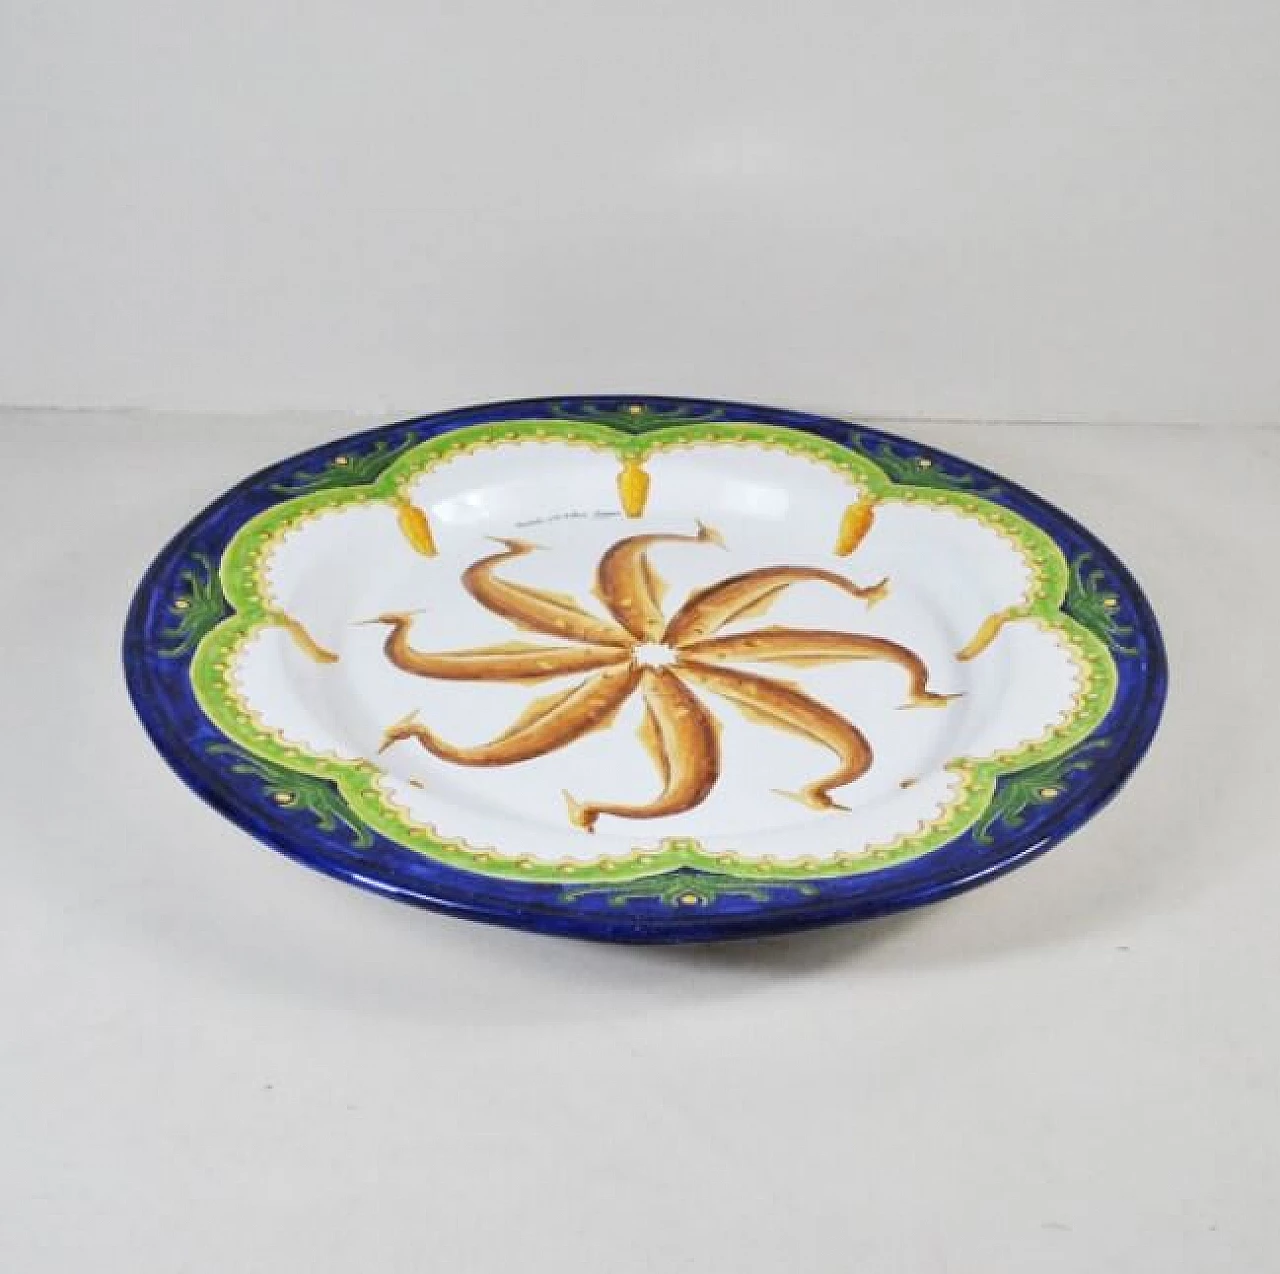 Decorative ceramic plate by Tarshito, 2000 1219719